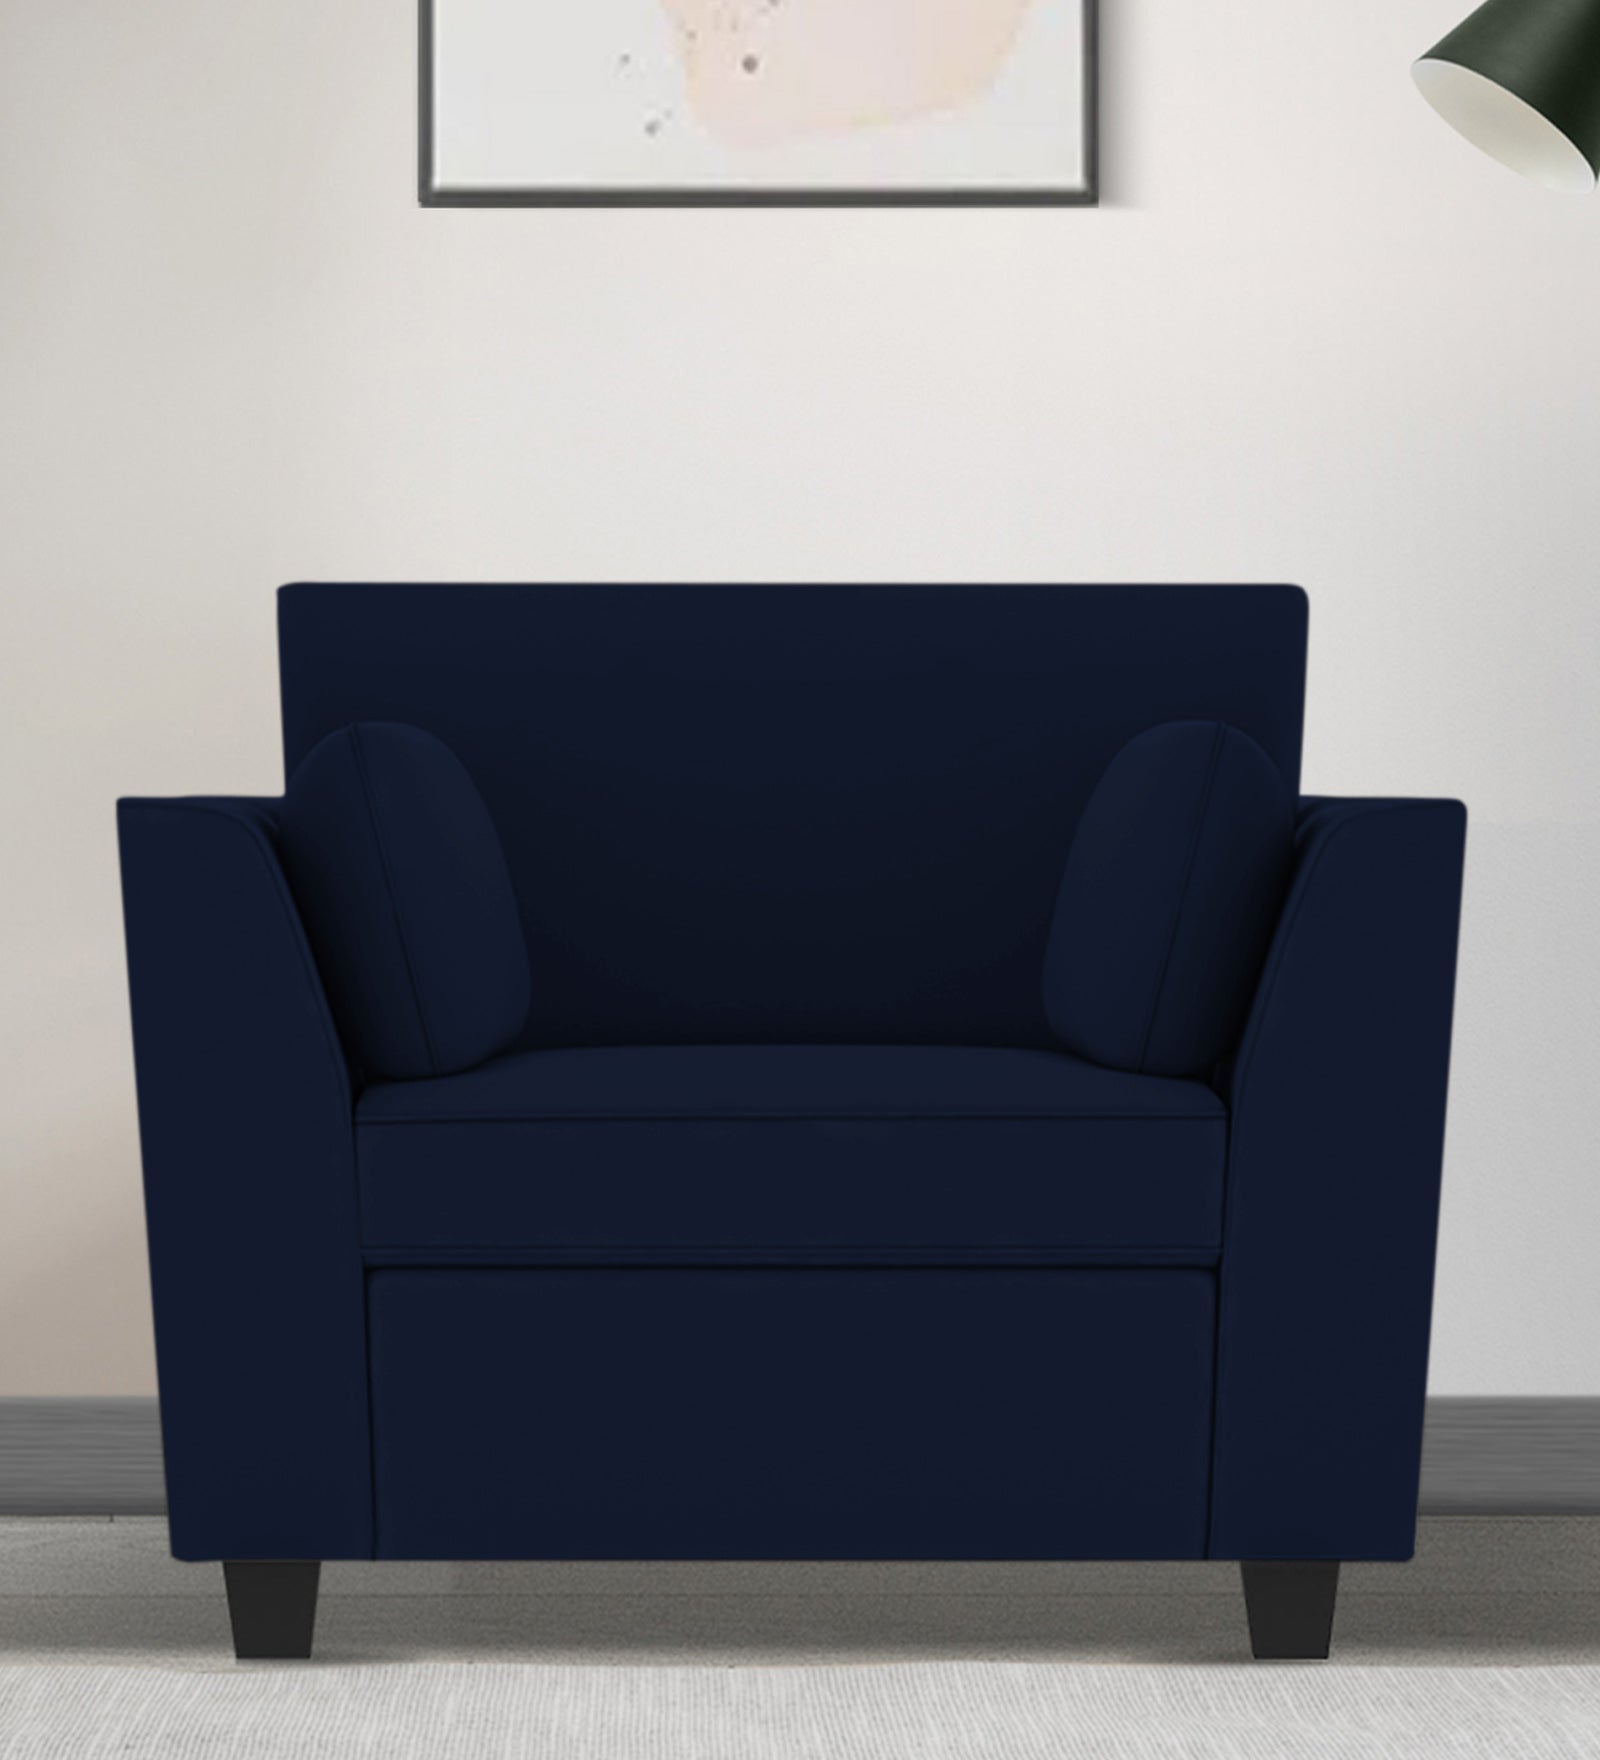 Bristo Velvet 1 Seater Sofa in Indigo Blue Colour With Storage